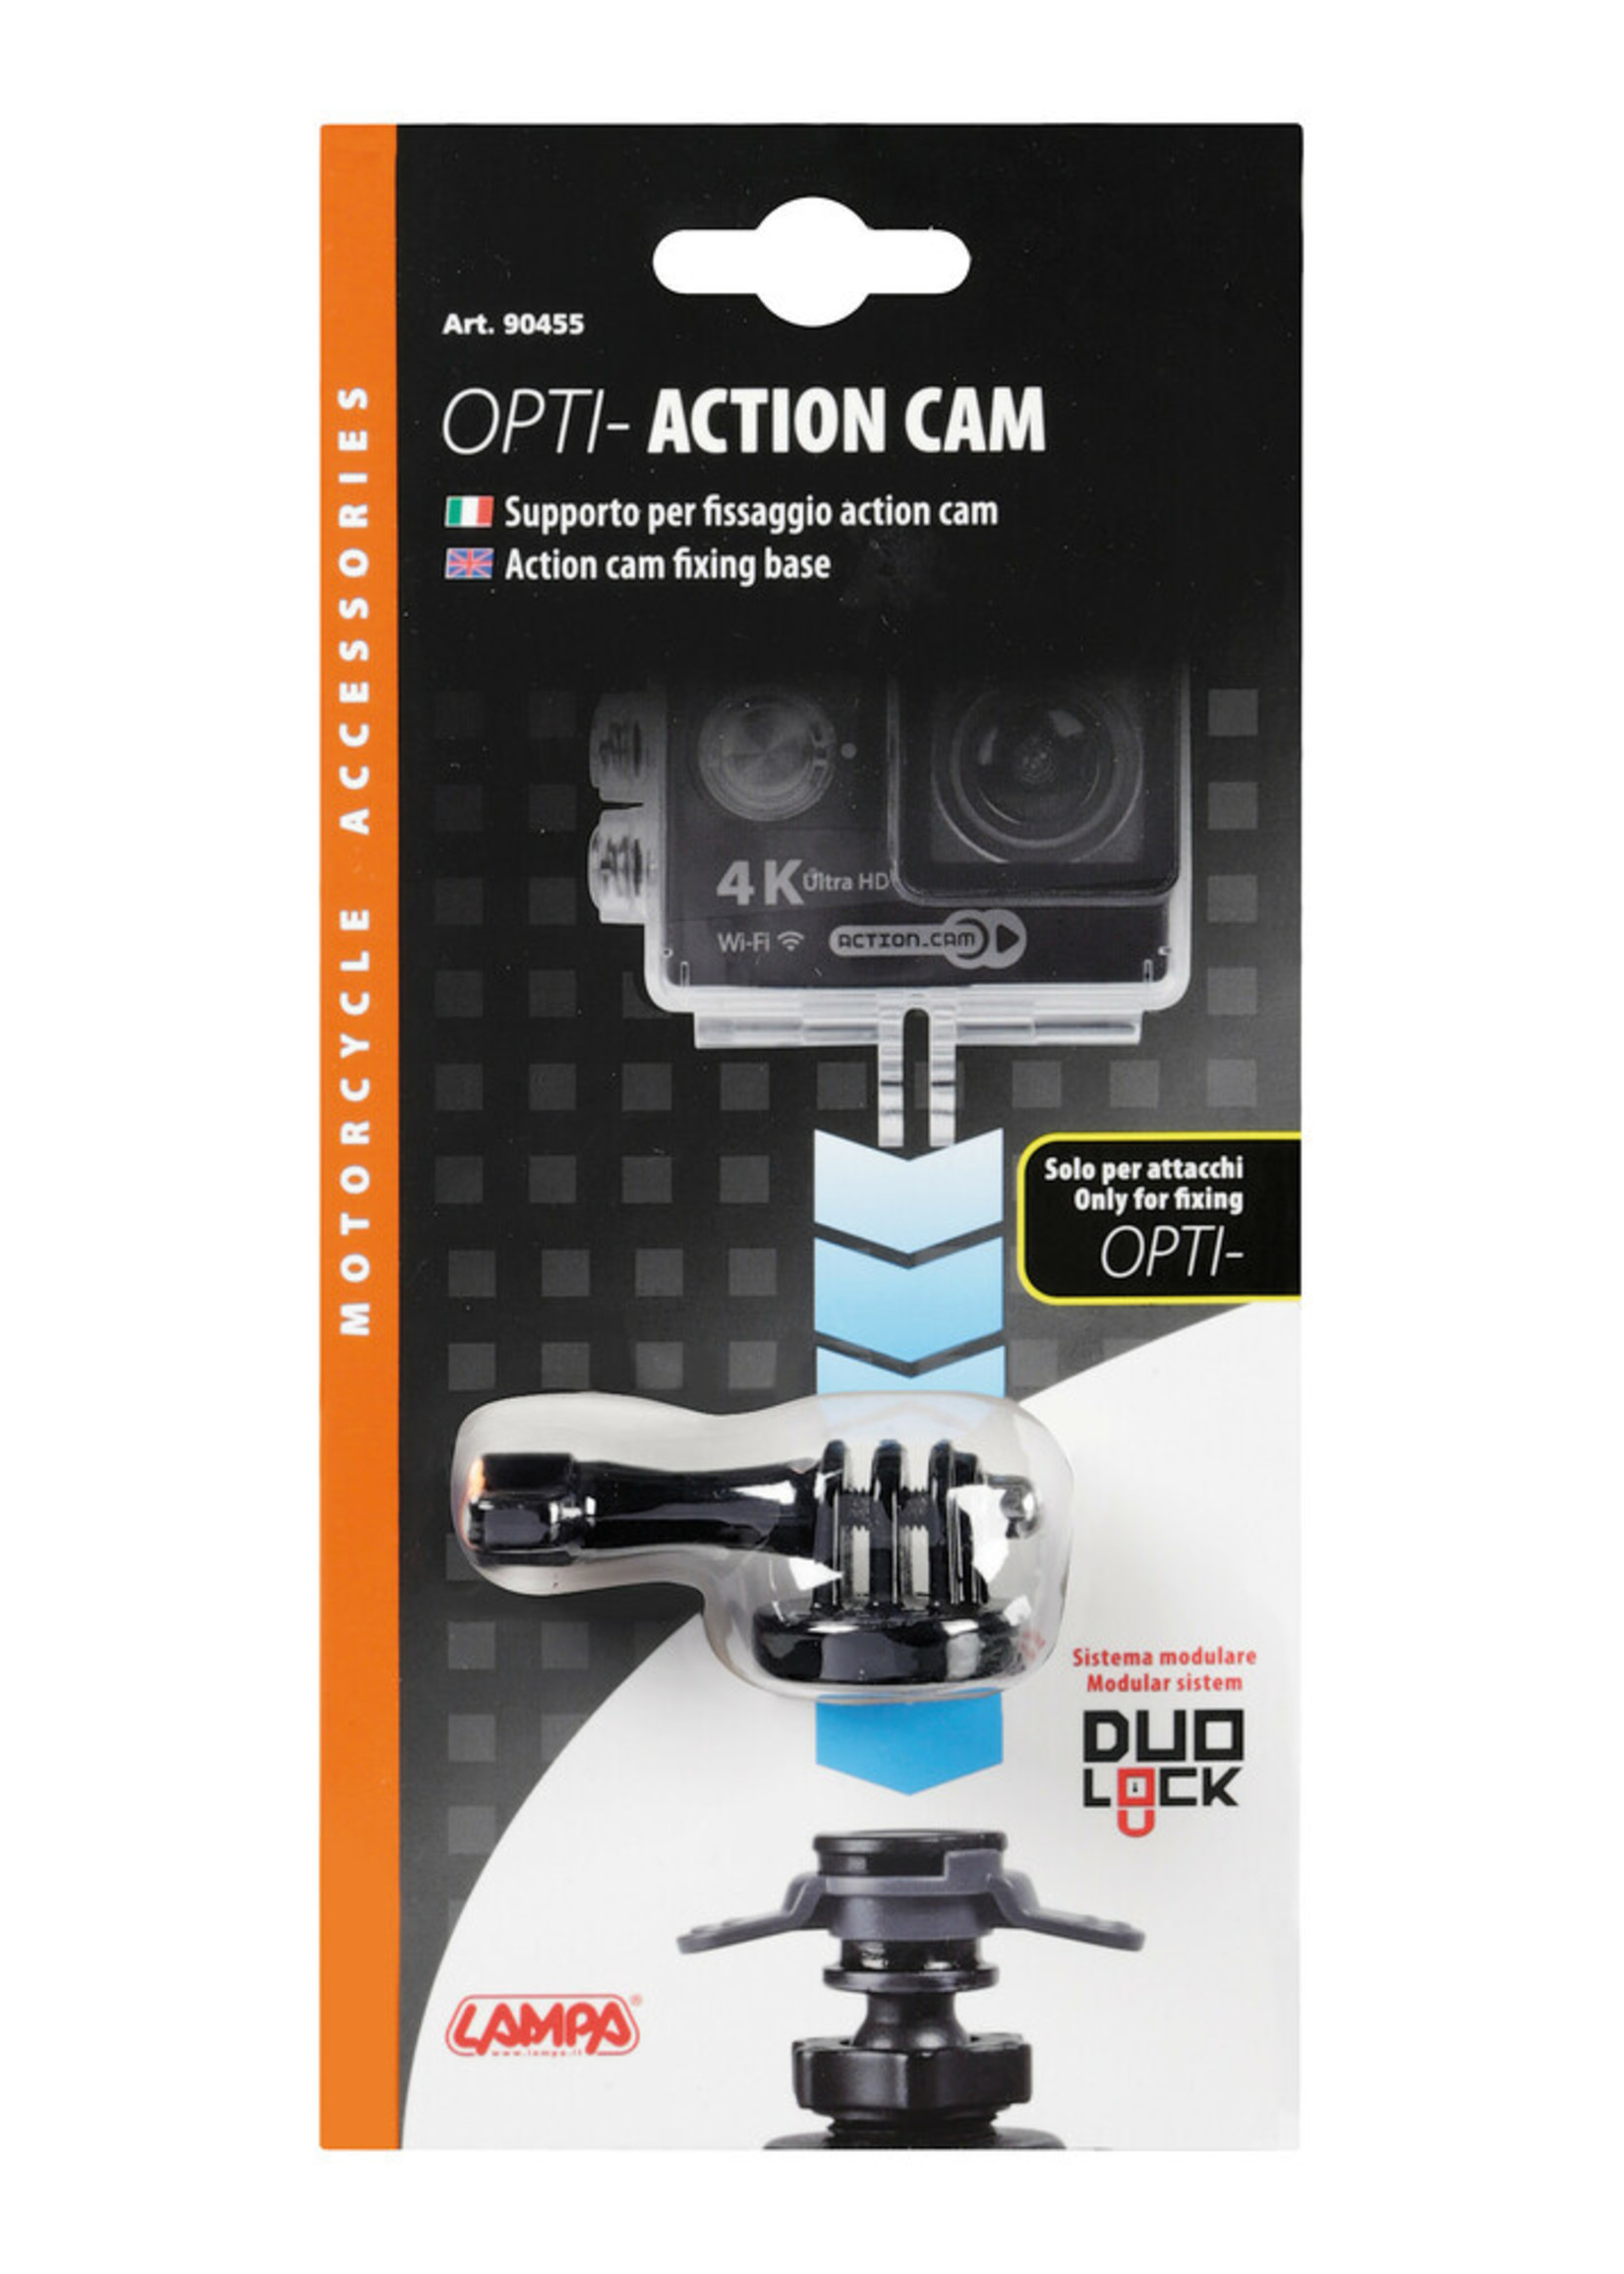 Optiline Action Cam, action cam fixing base